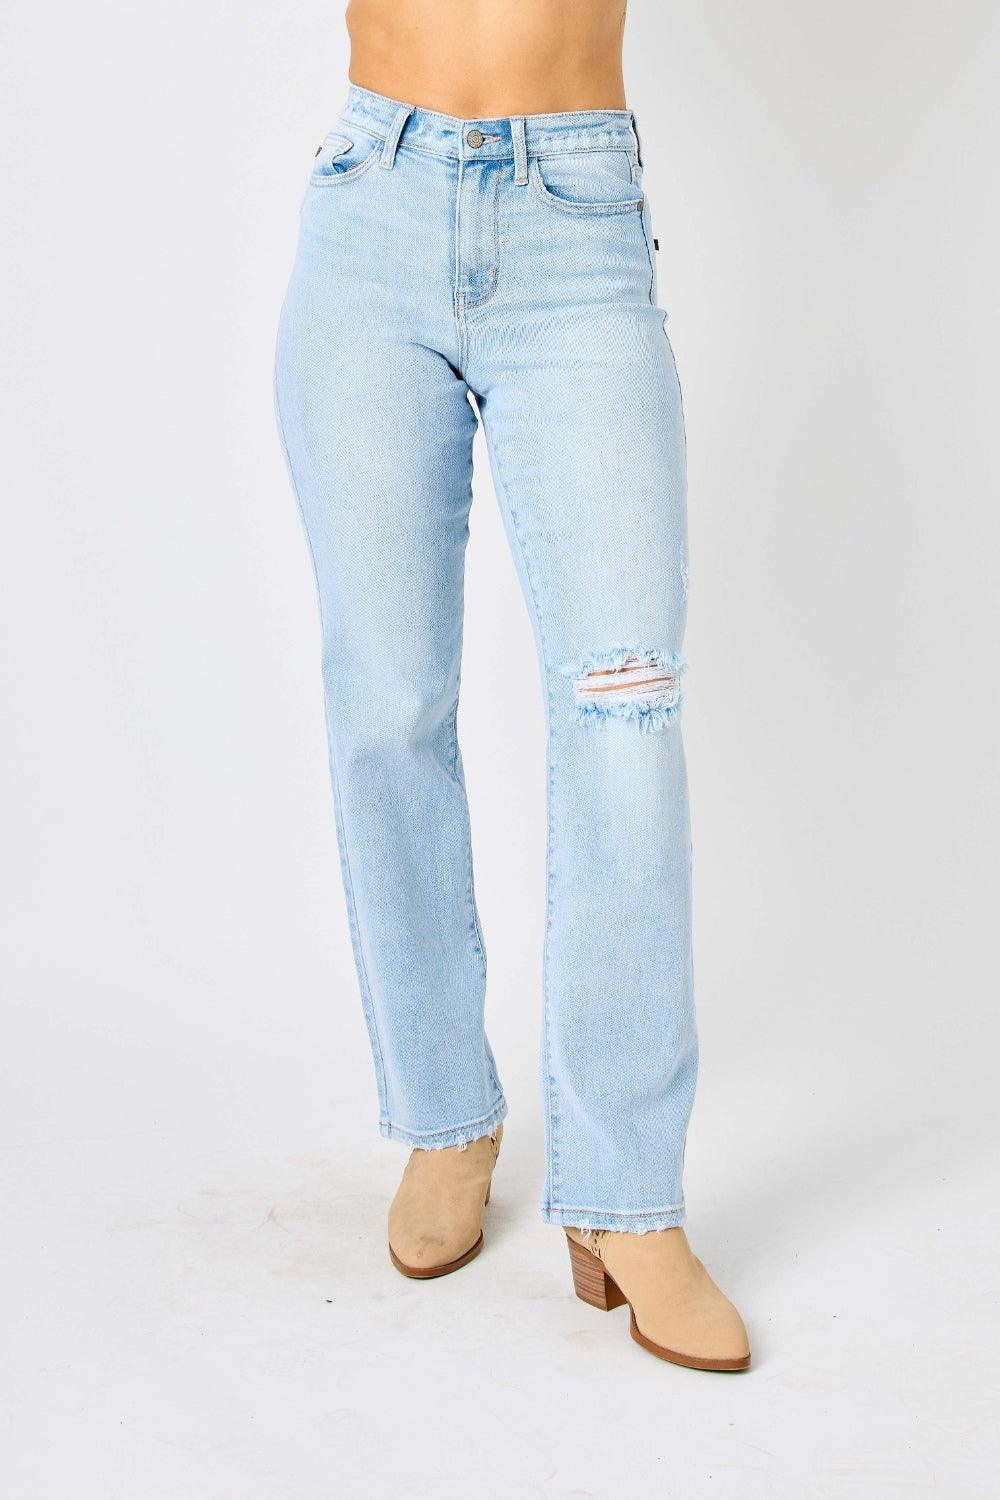 Judy Blue High Waist Distressed Straight Jeans - Jessiz Boutique